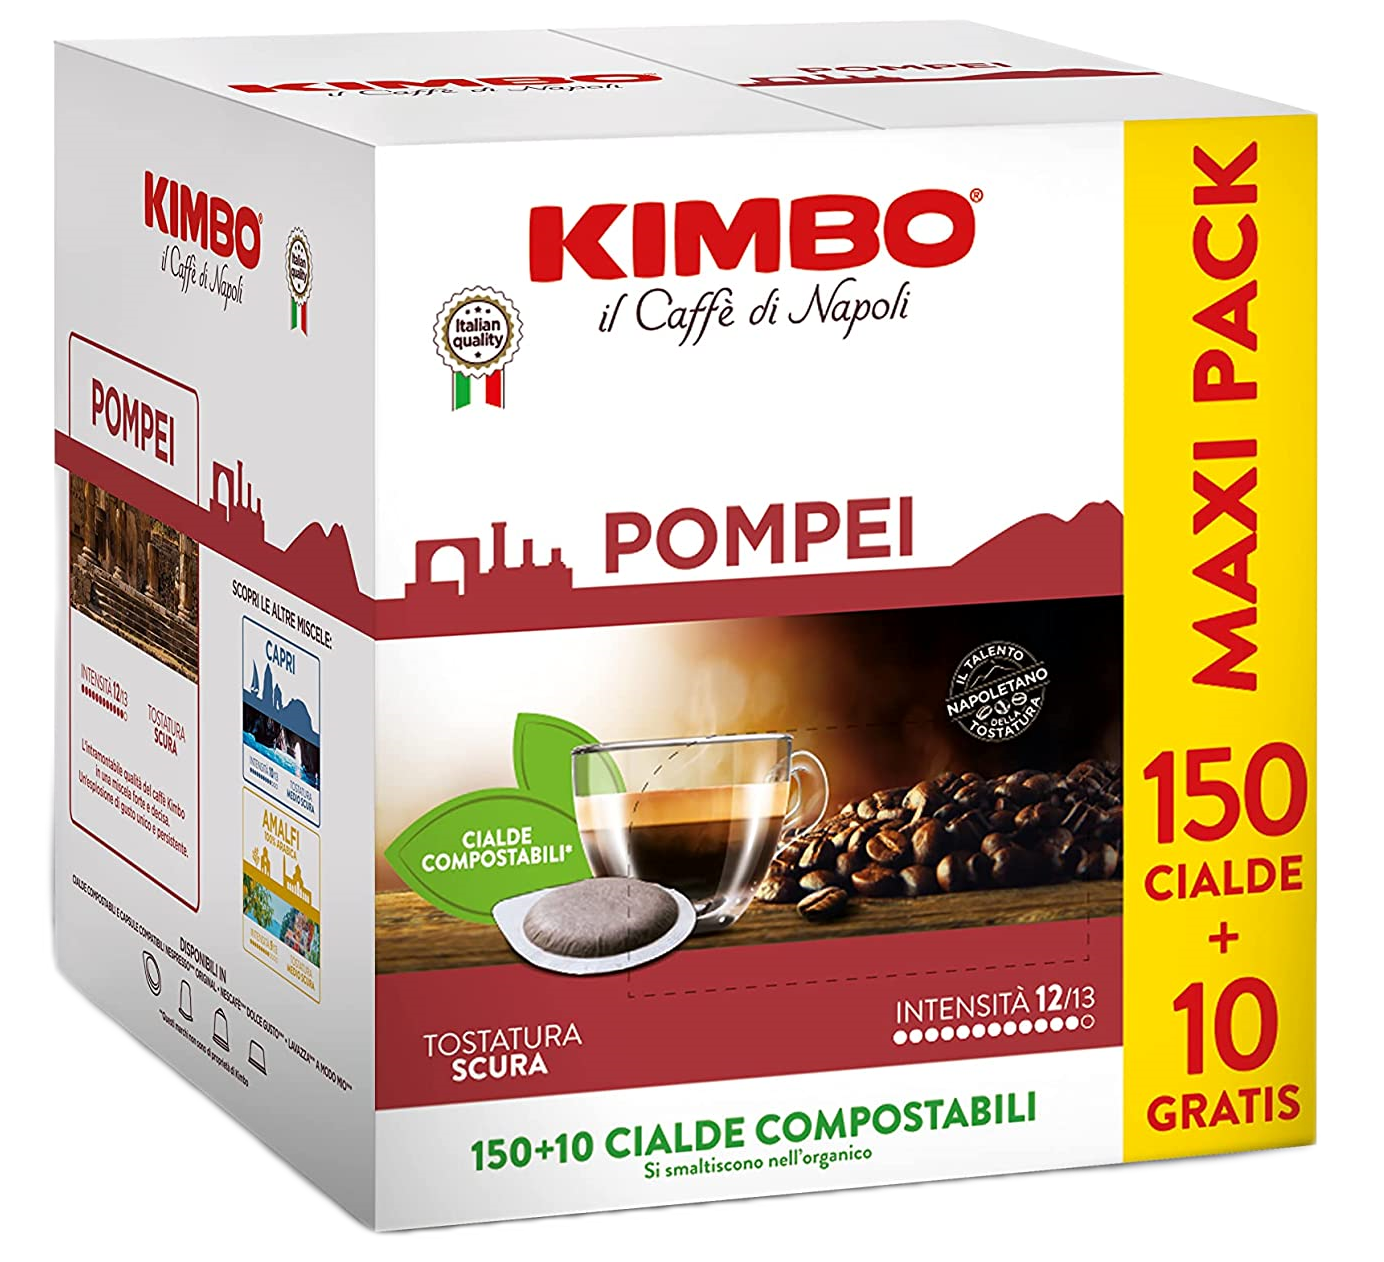 CAFFÈ KIMBO POMPEI - Box 150 CIALDE ESE44 da 7.3g + 10 CIALDE